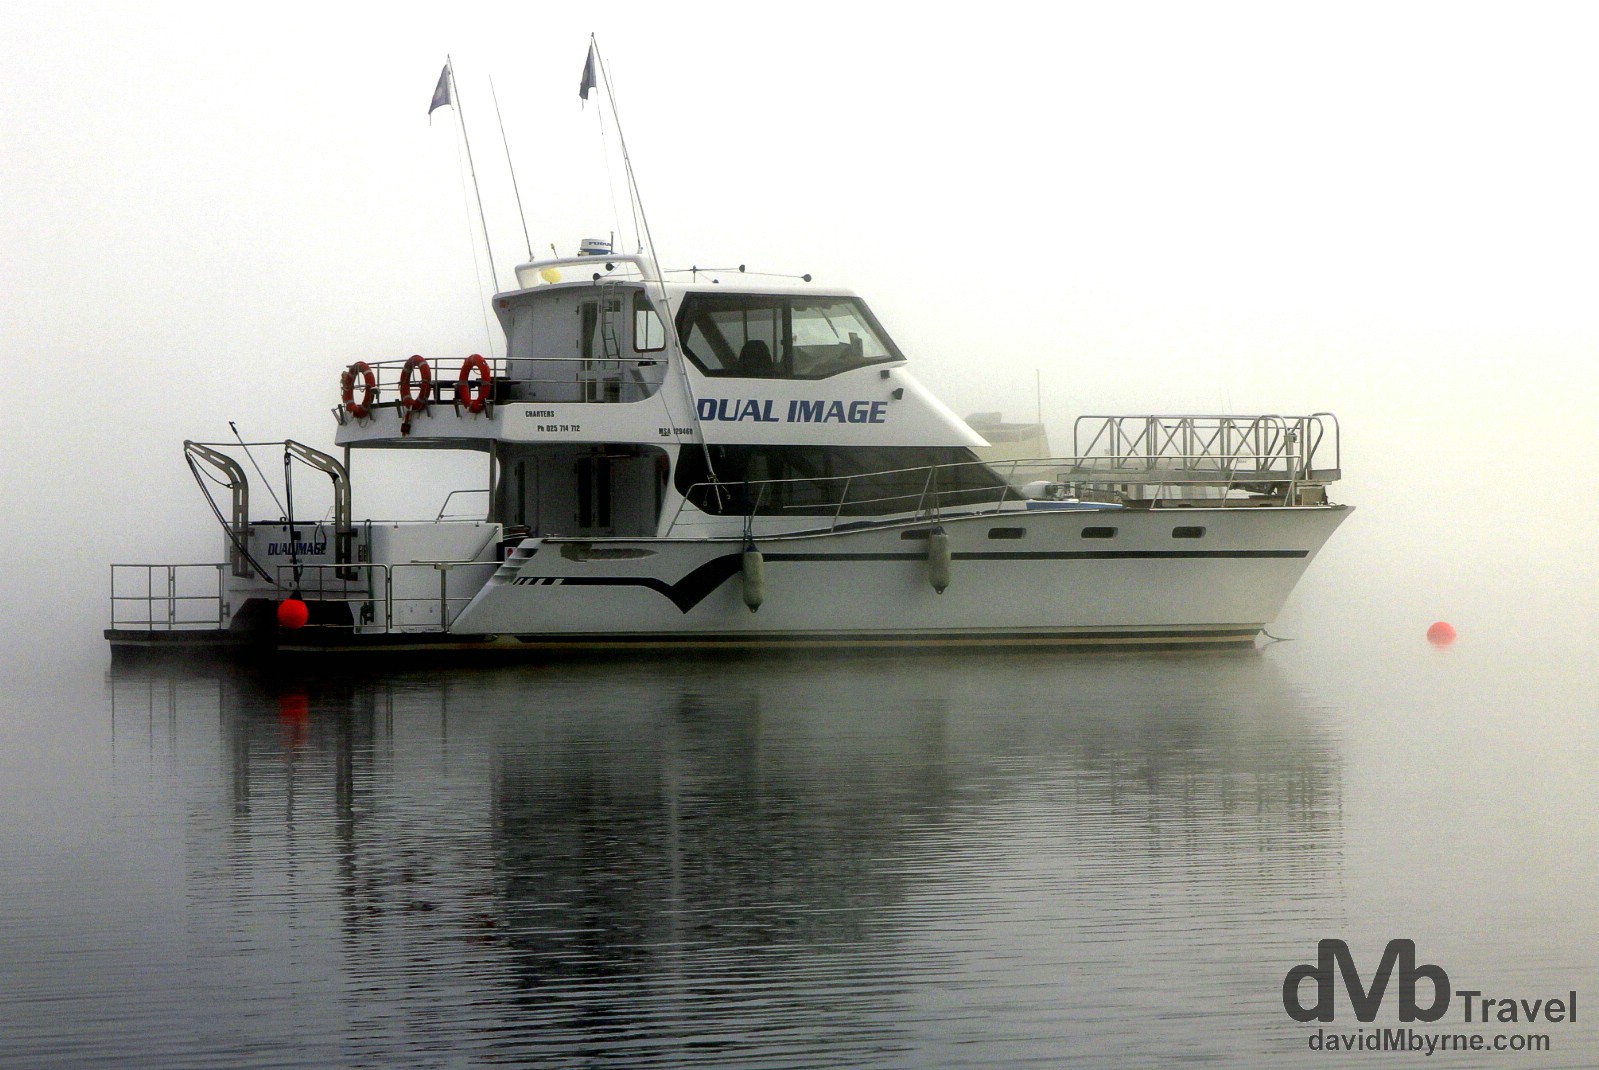 Pleasure craft moored on a misty Lake Wanaka, South Island, New Zealand. May 22nd 2012.